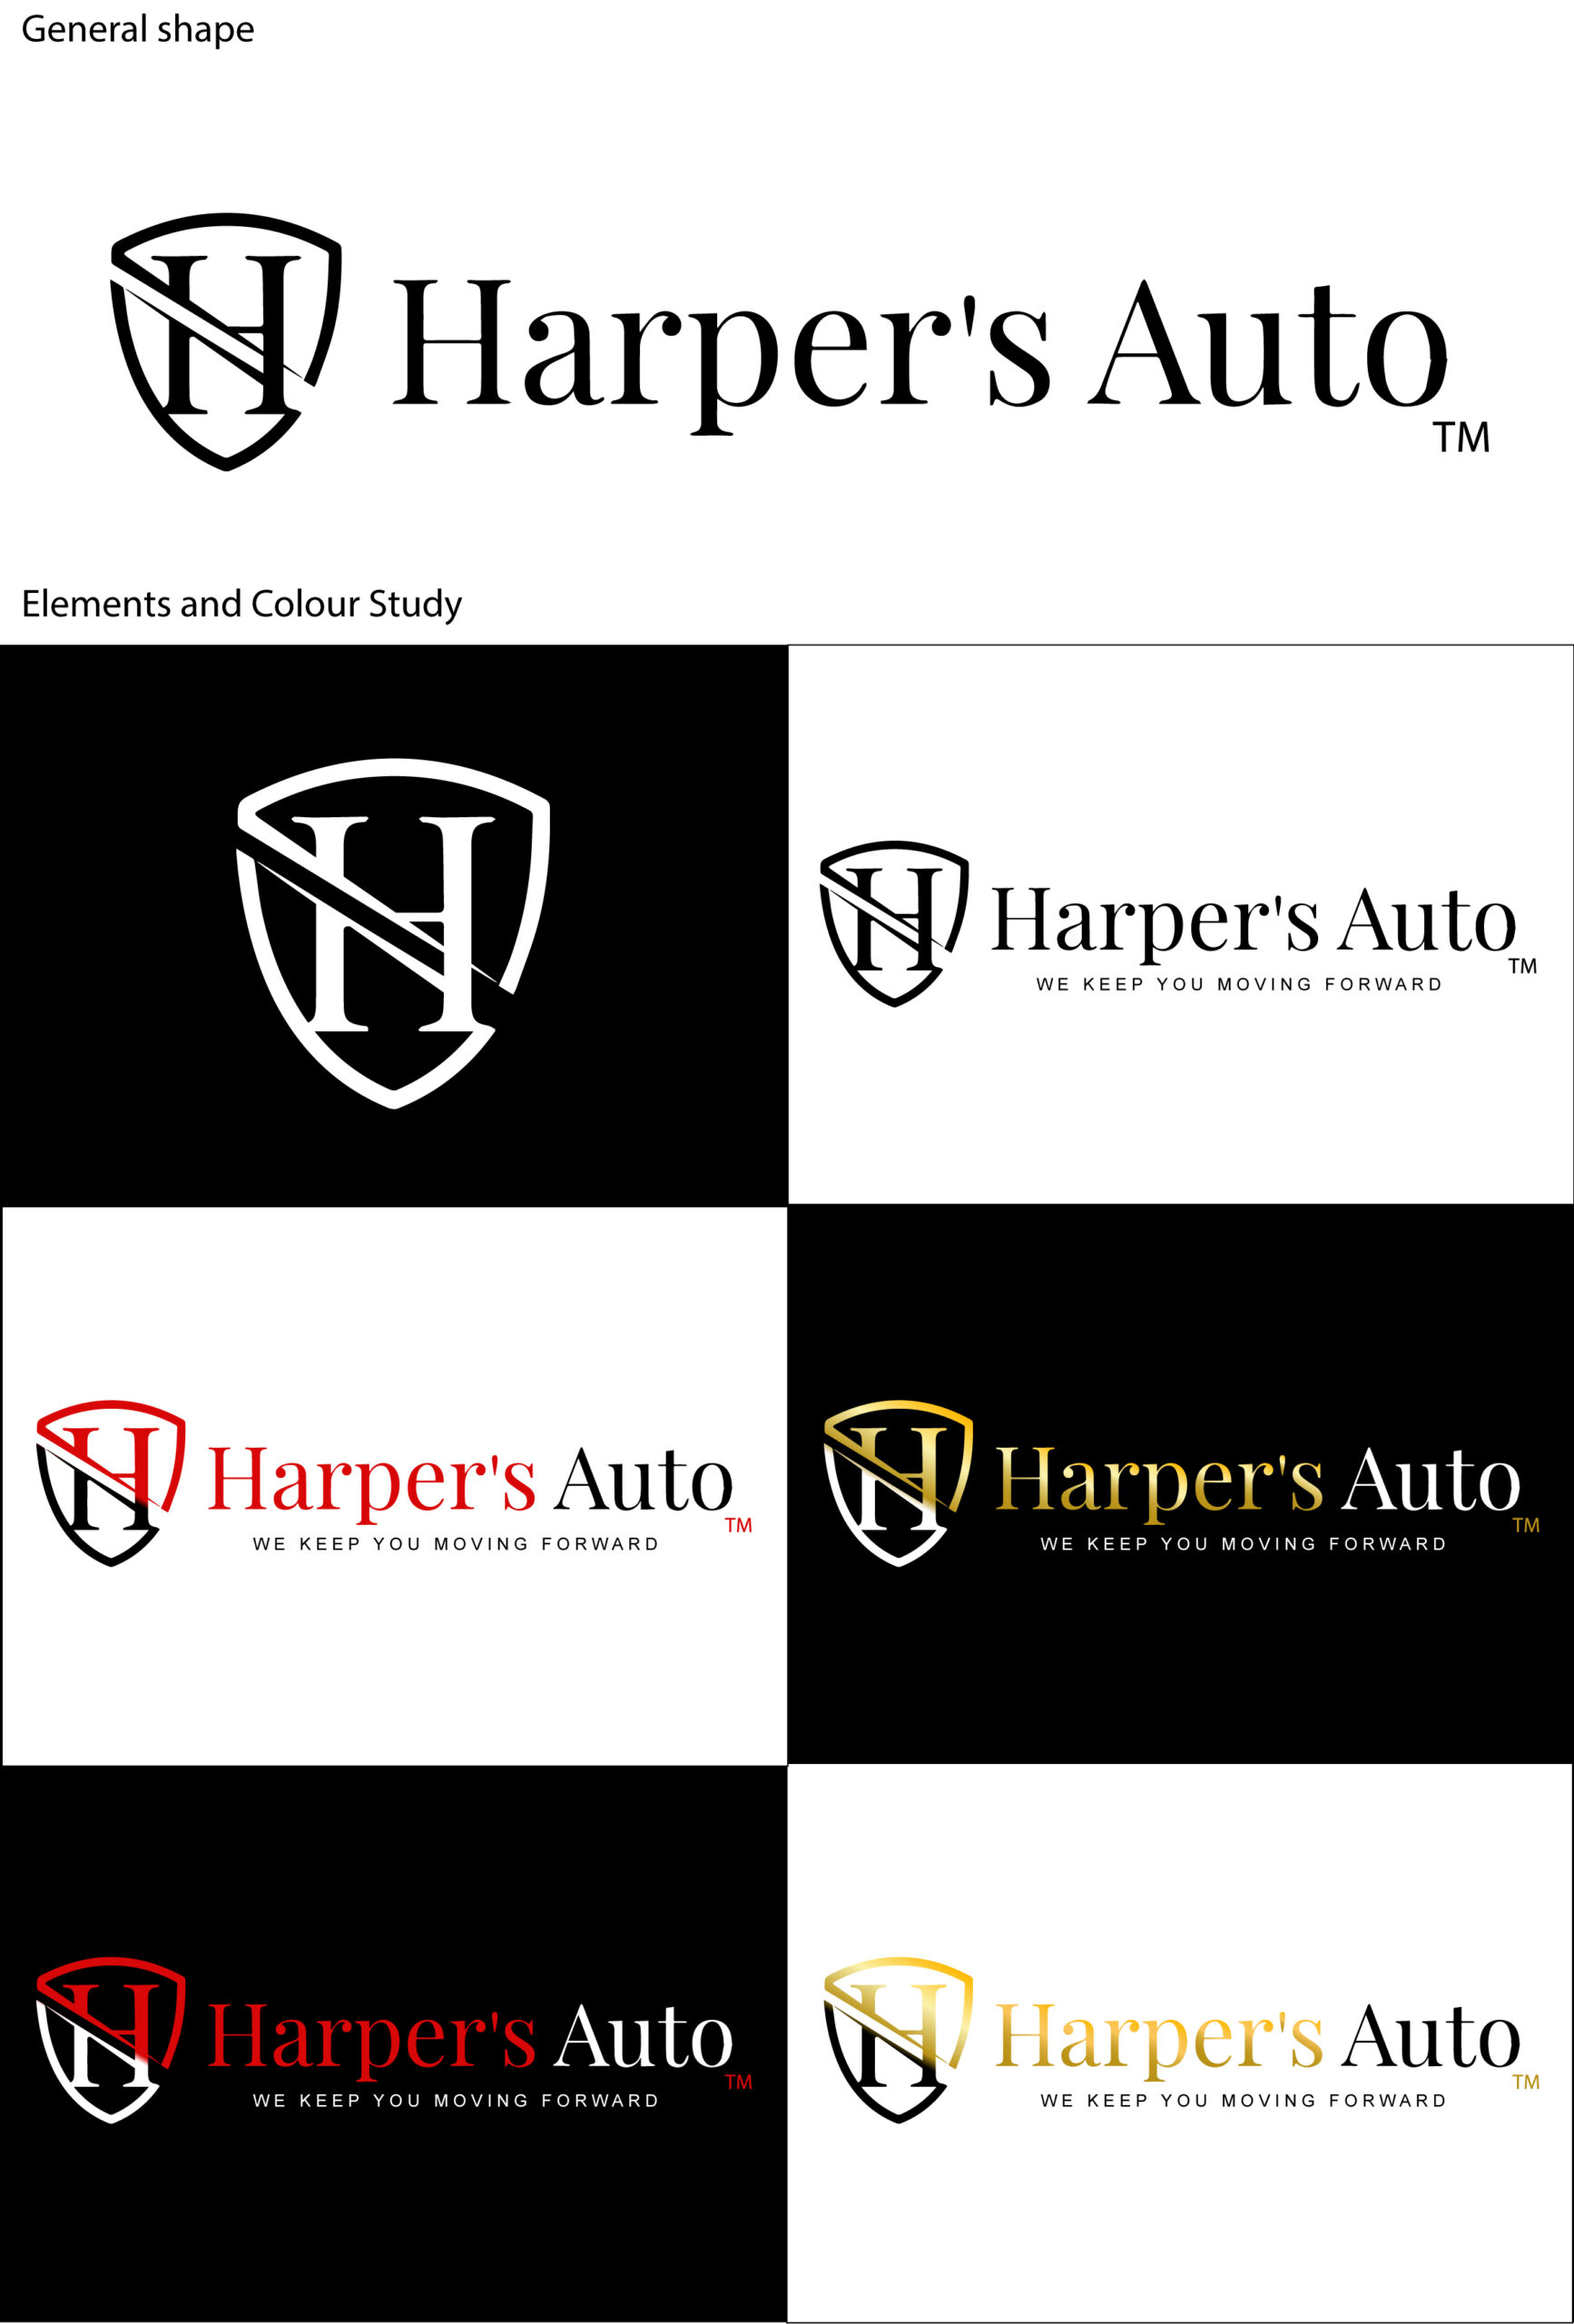 A Harper's Auto logo presentation in different color variants